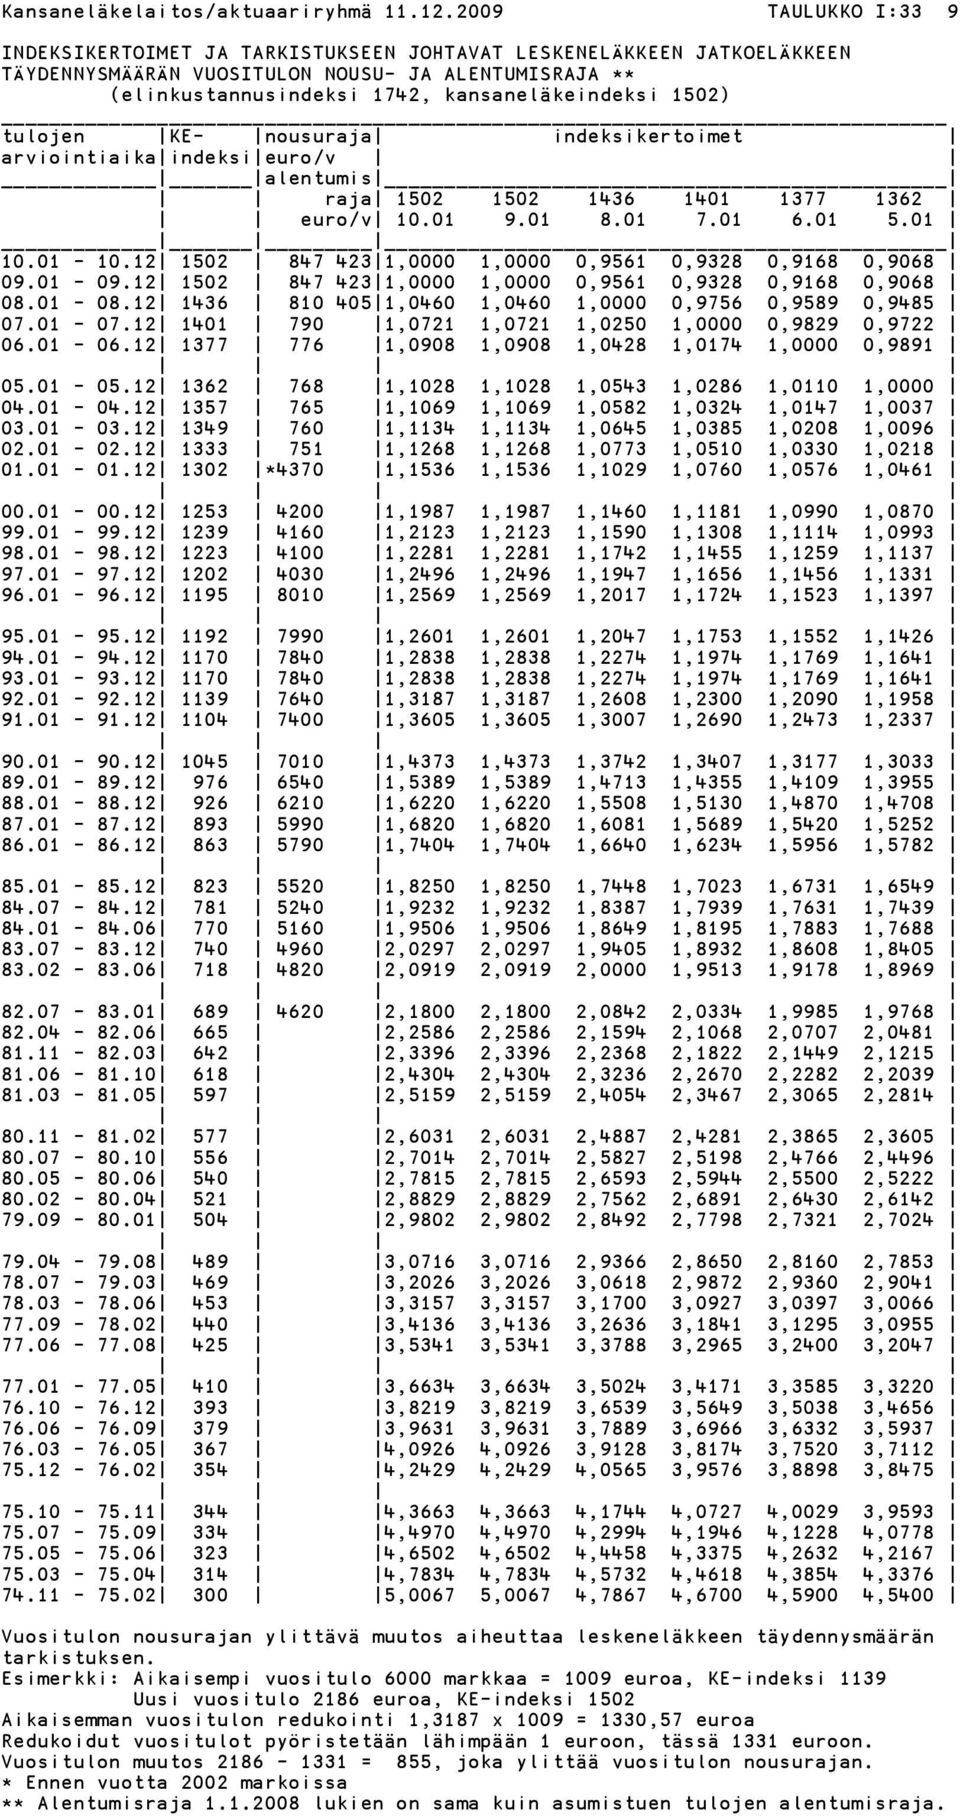 tulojen KE- nousuraja indeksikertoimet arviointiaika indeksi euro/v alentumis raja 1502 1502 1436 1401 1377 1362 euro/v 10.01 9.01 8.01 7.01 6.01 5.01 10.01-10.